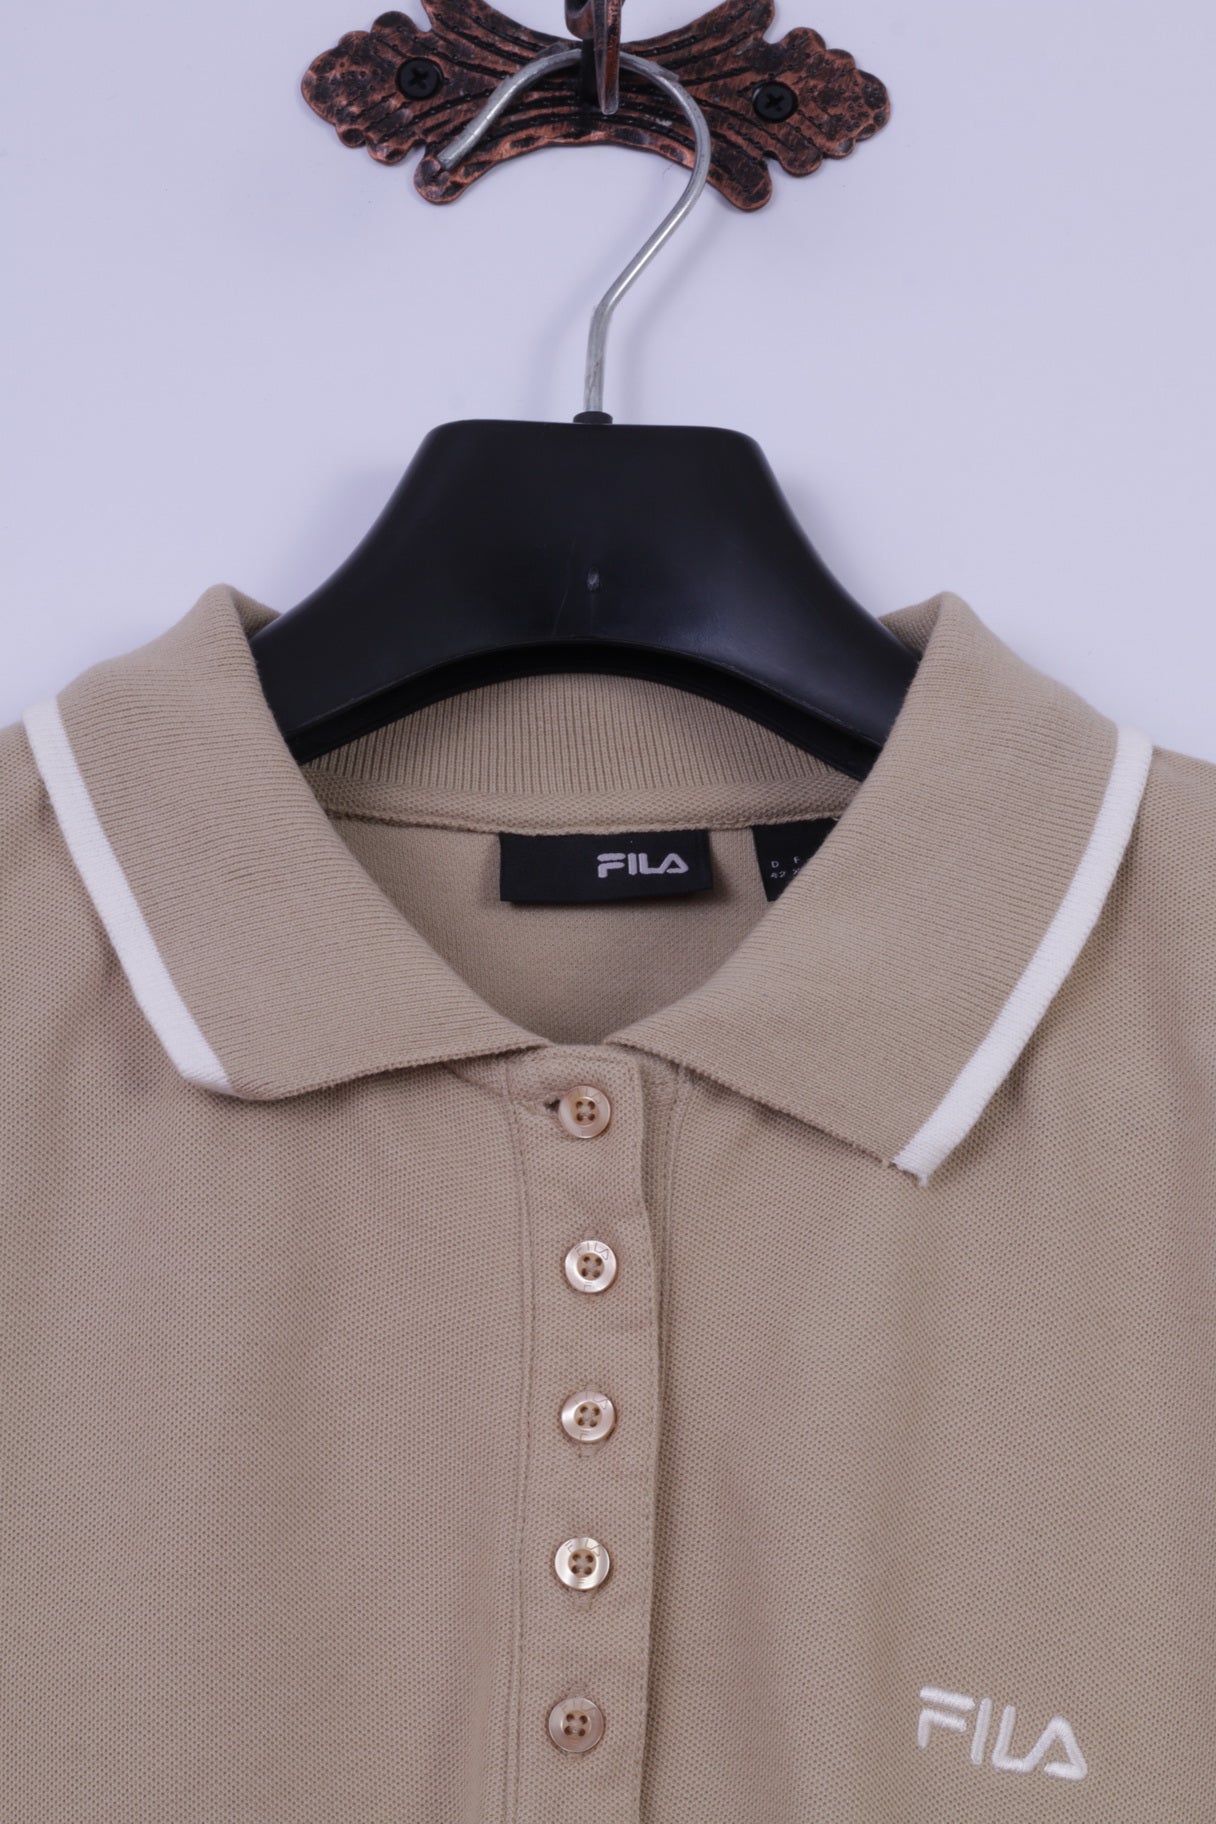 FILA Womens 16 XL Polo Shirt Beige Cotton Stretch Detailed Buttons Sport Top